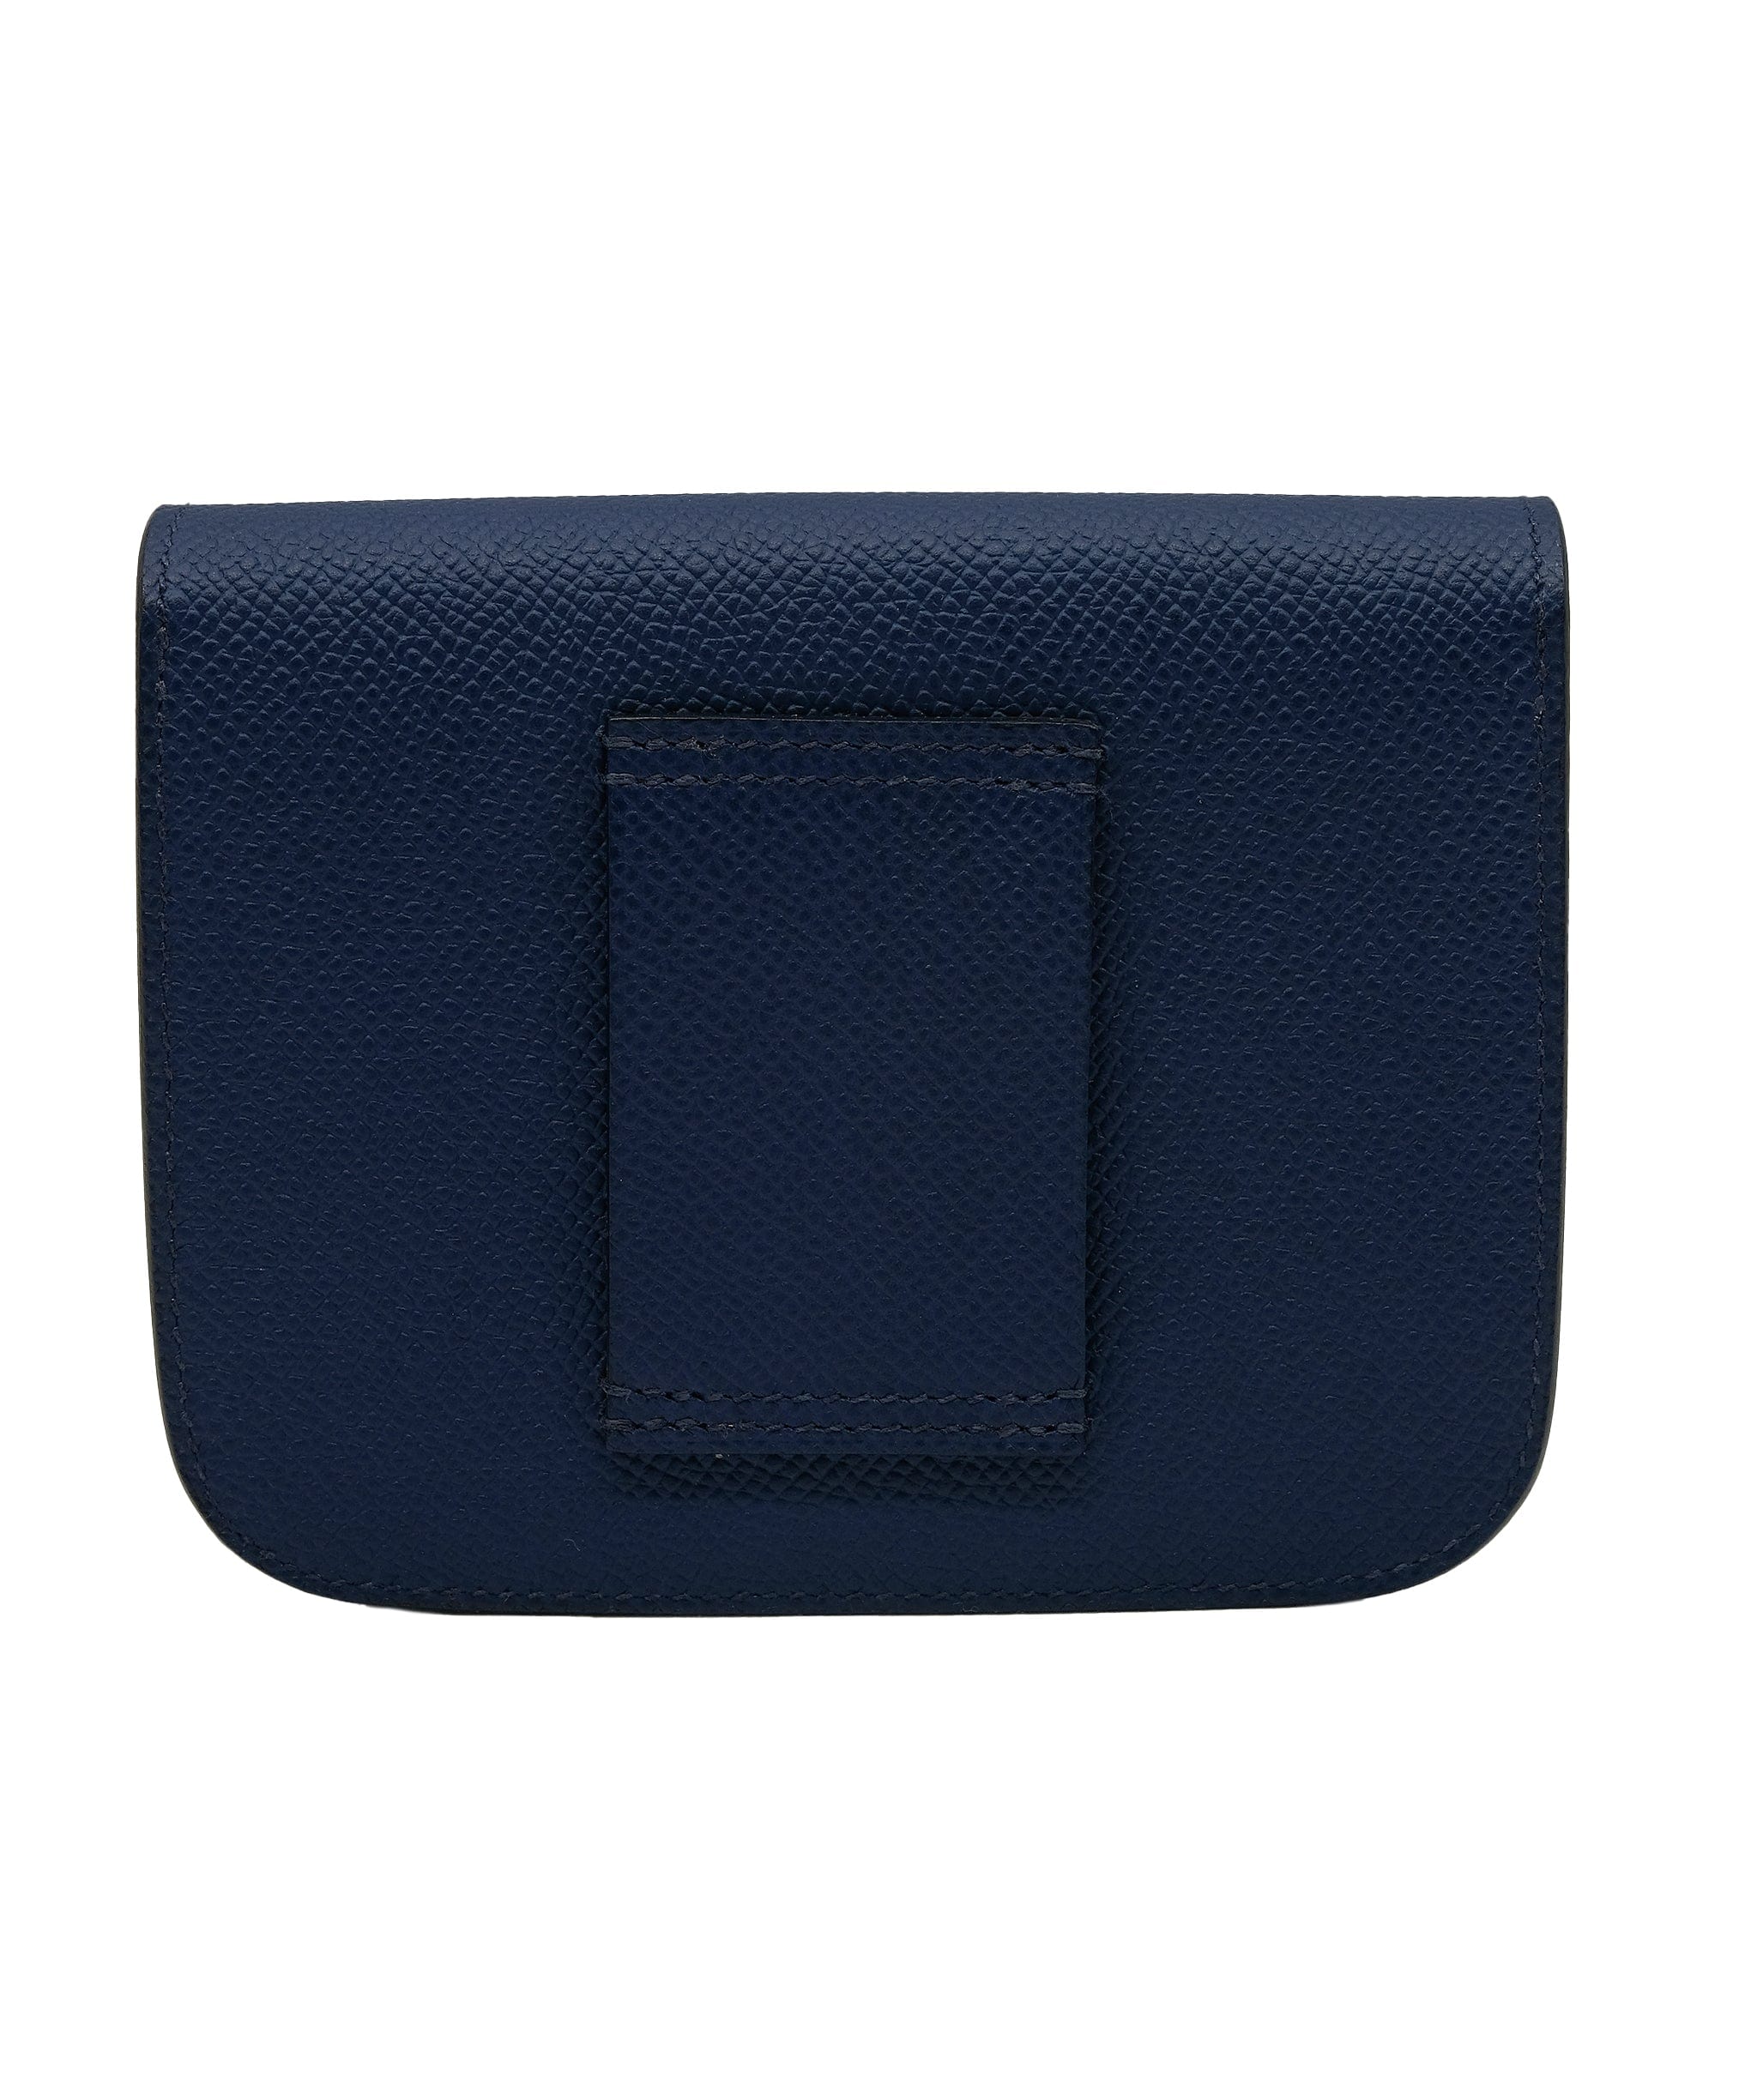 Hermès Hermes Slim Constance Navy Blue PHW Epsom Leather RJC3020